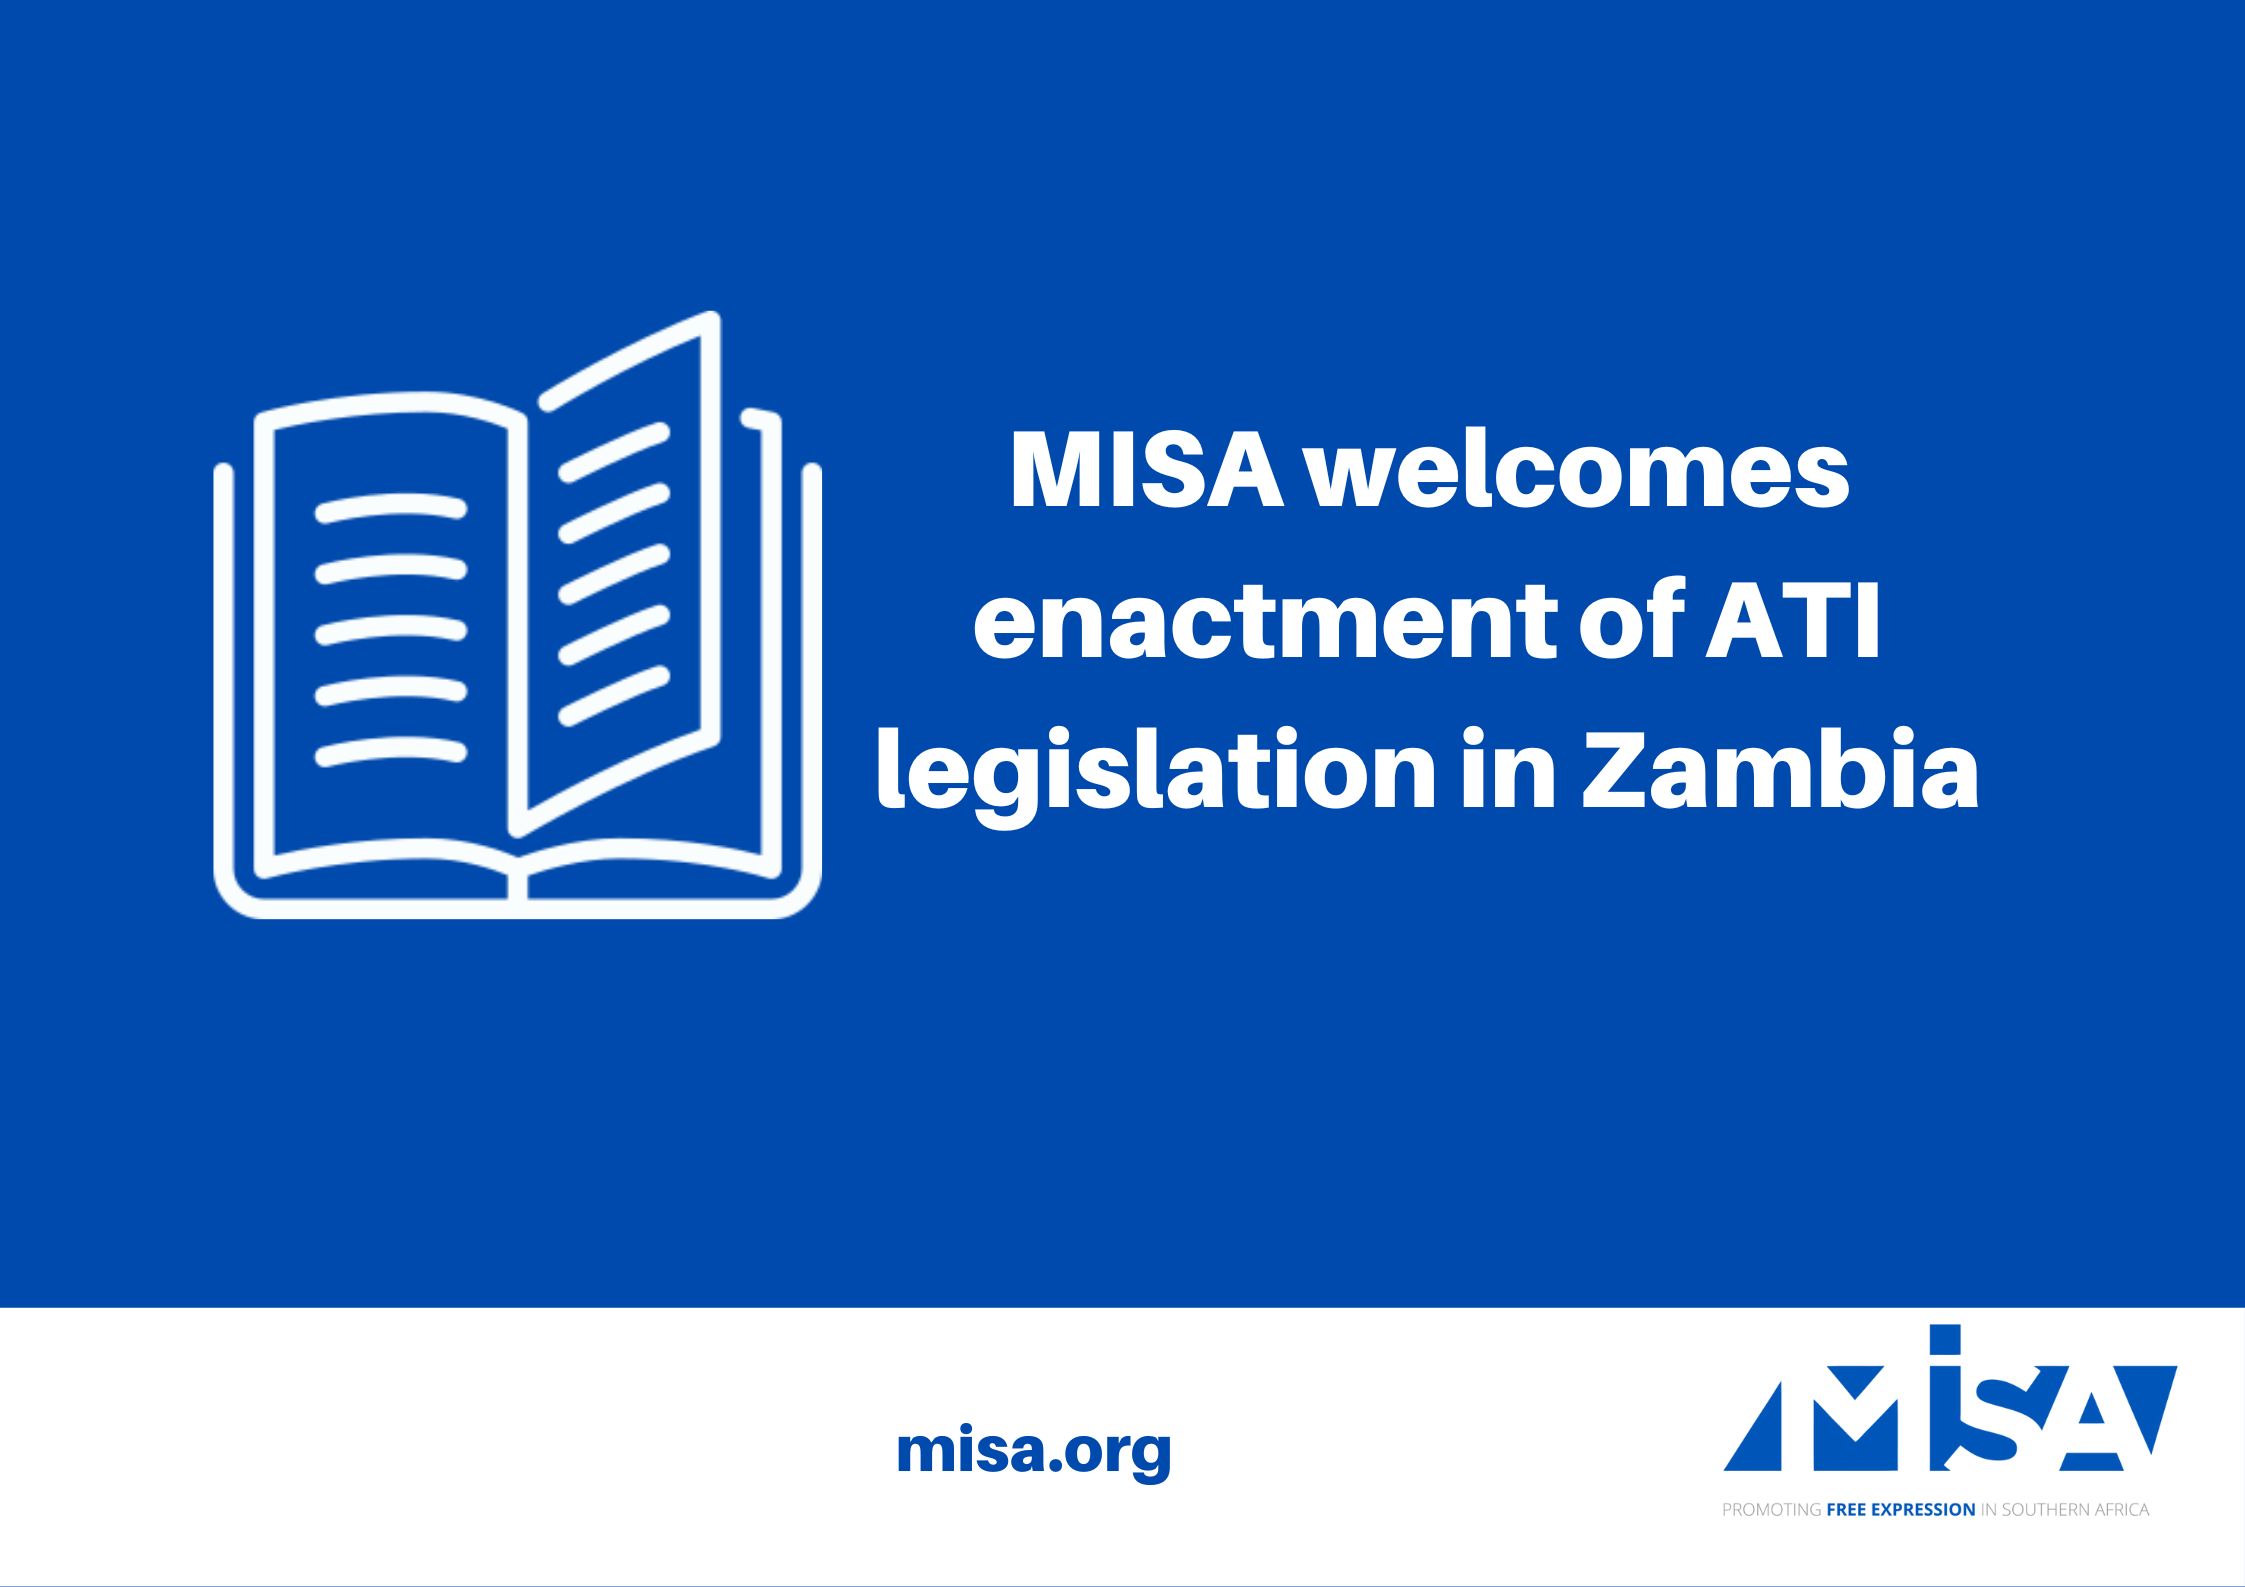 MISA welcomes enactment of ATI legislation in Zambia